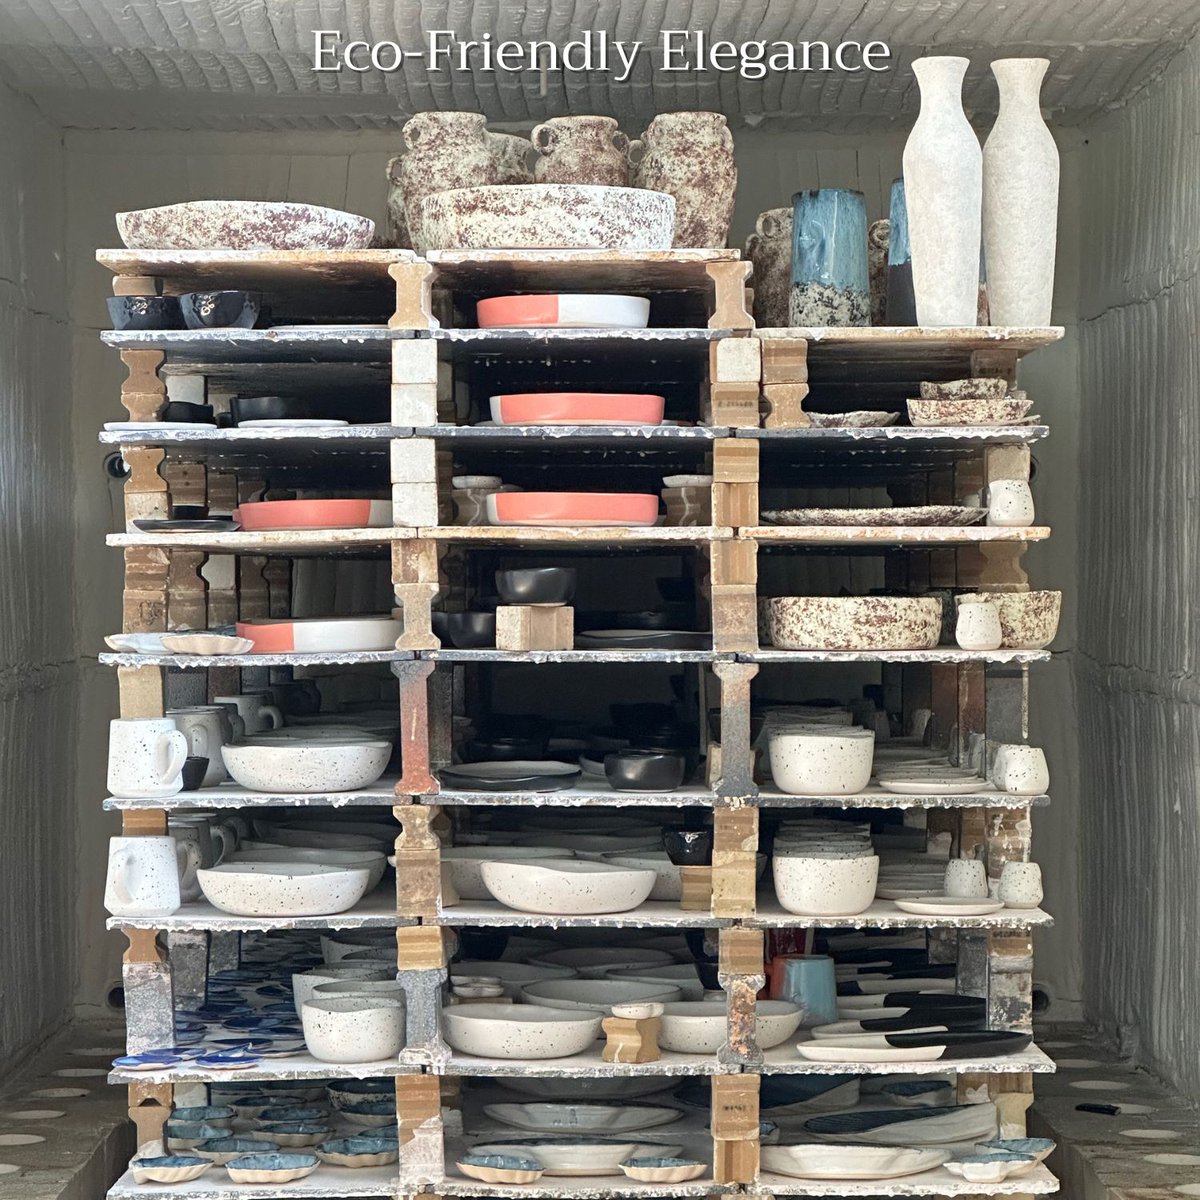 Experience the Beauty of Handmade Ceramics! 🏺✨
.
instagram.com/p/C5TUm1doFkn/
.
#HandmadeCeramics #ArtisticCraftsmanship #SupportLocalArtisans #SustainableStyle #ArtisanCrafted #EcoFriendly #HandmadeTreasures #CeramicArt #LocalArtisans #UniqueArtistry